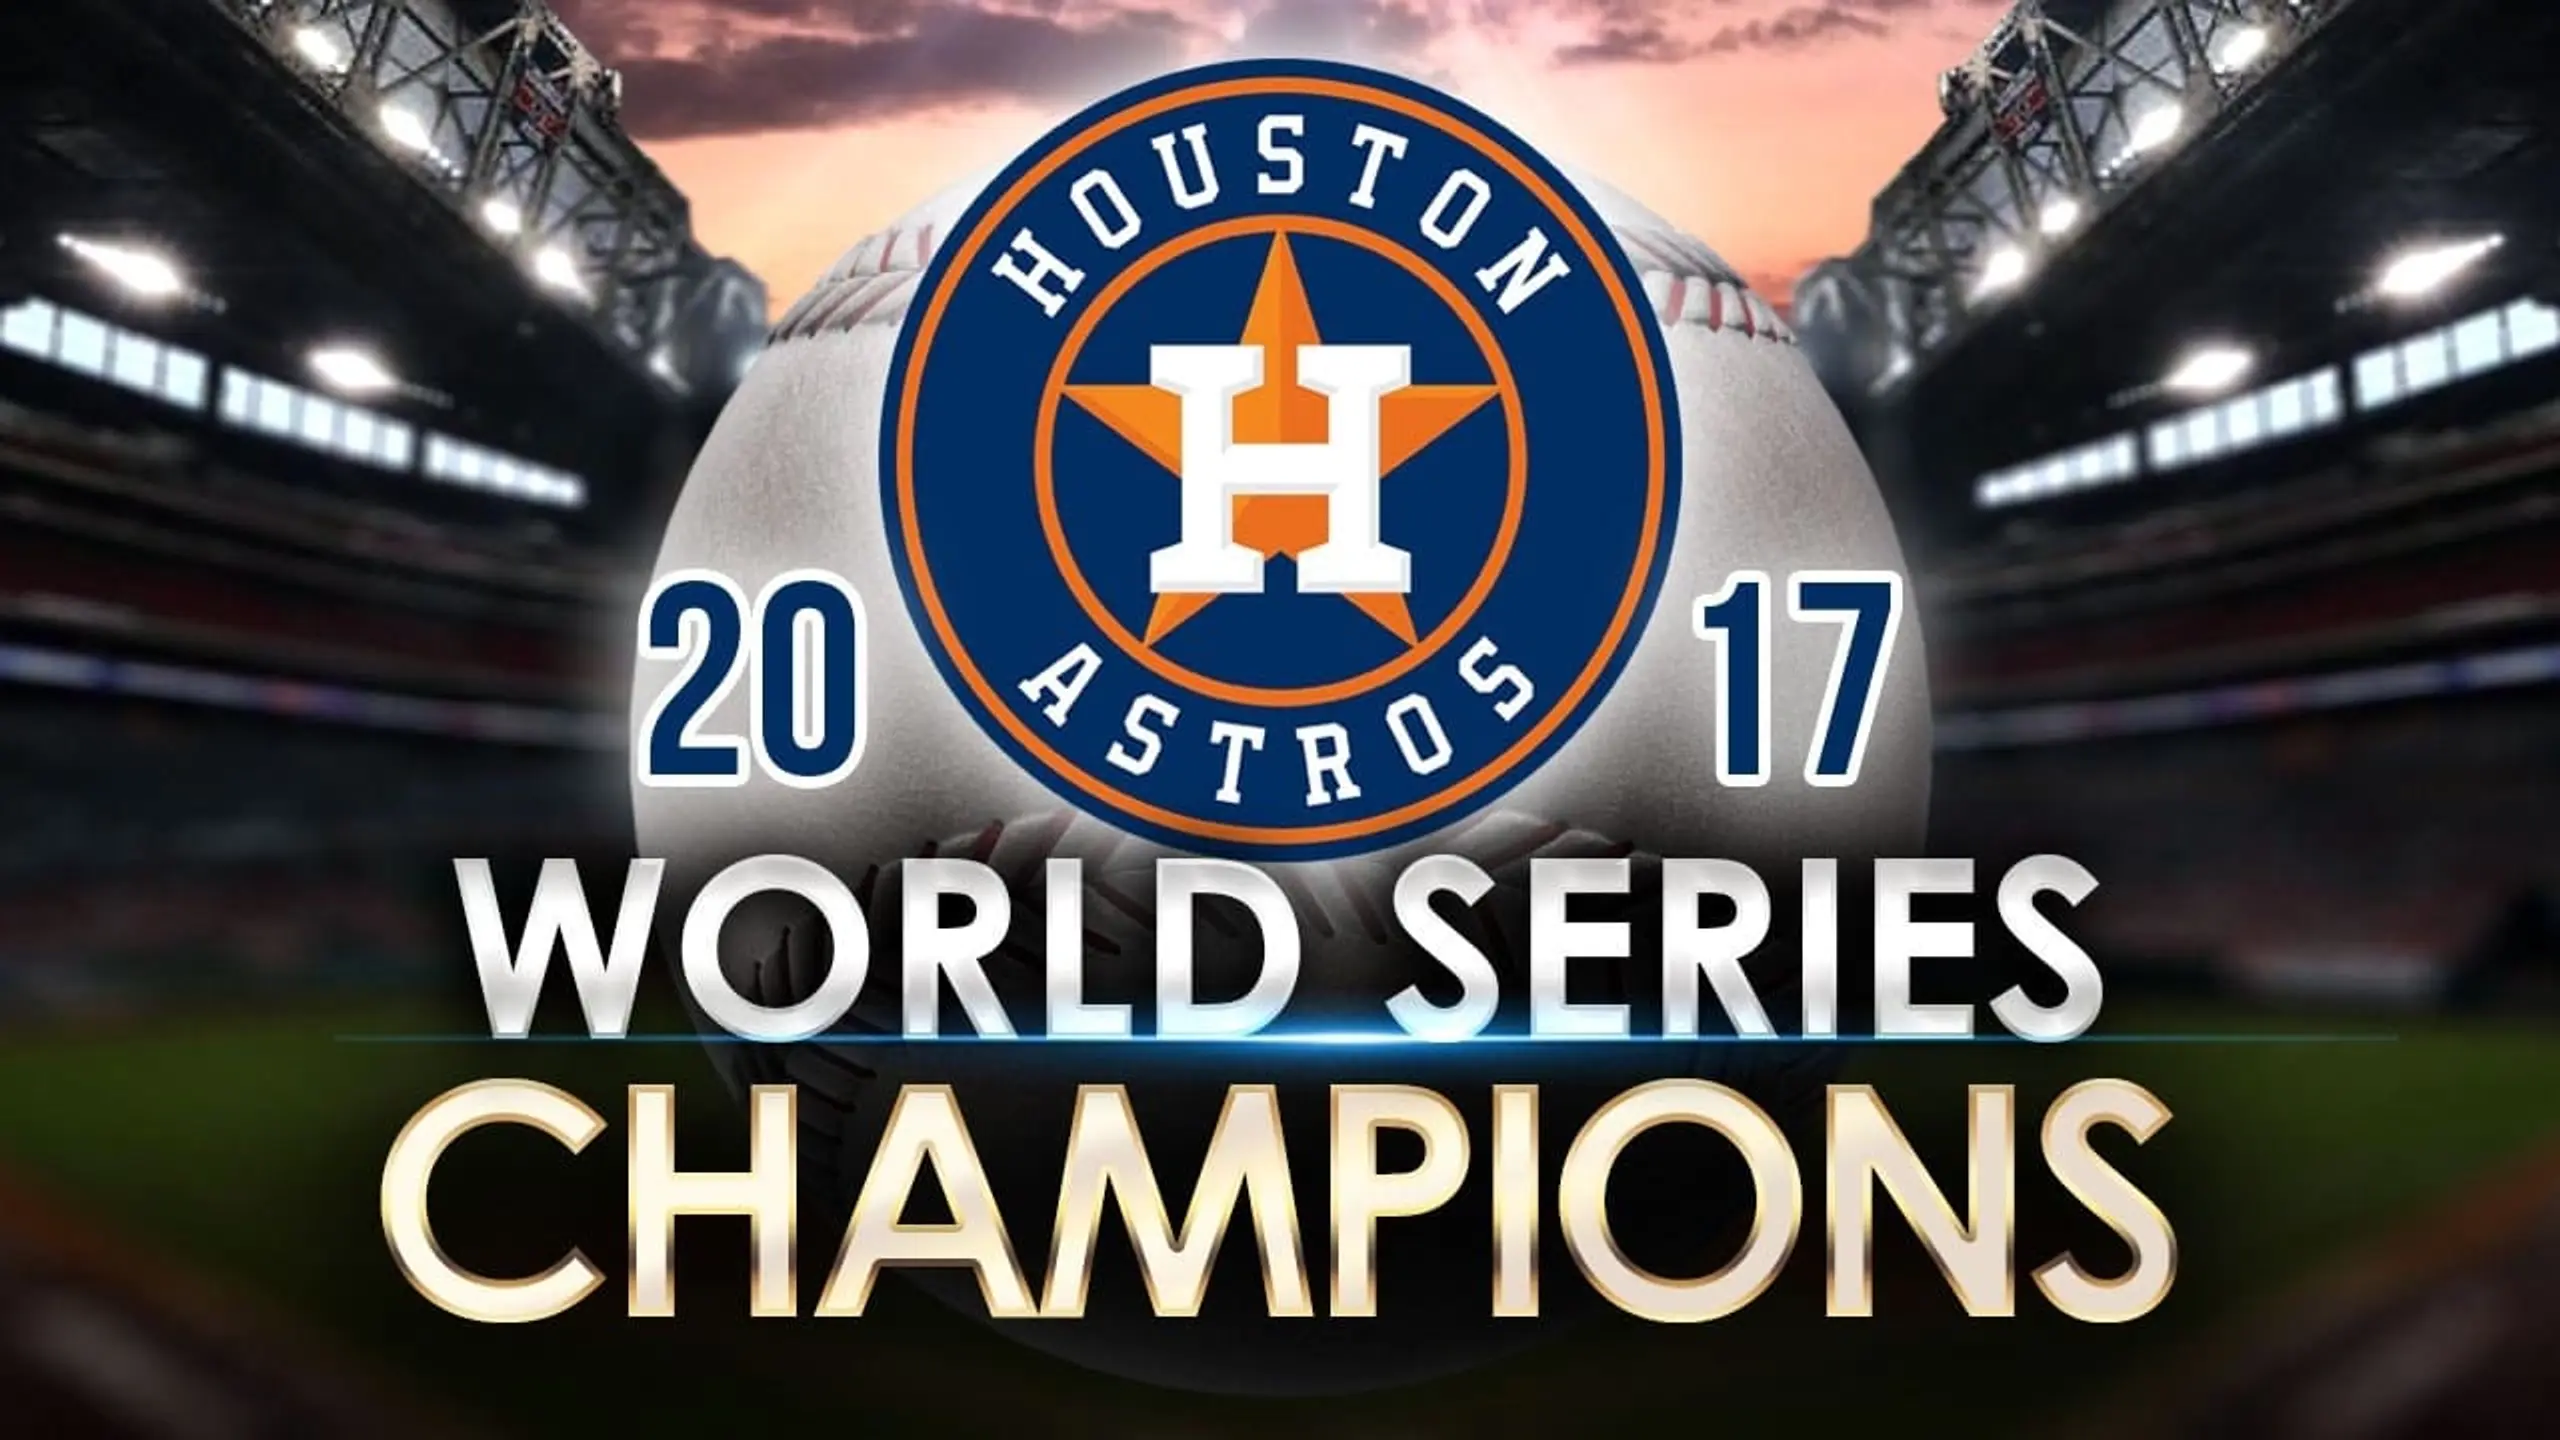 2017 World Series Champions: The Houston Astros